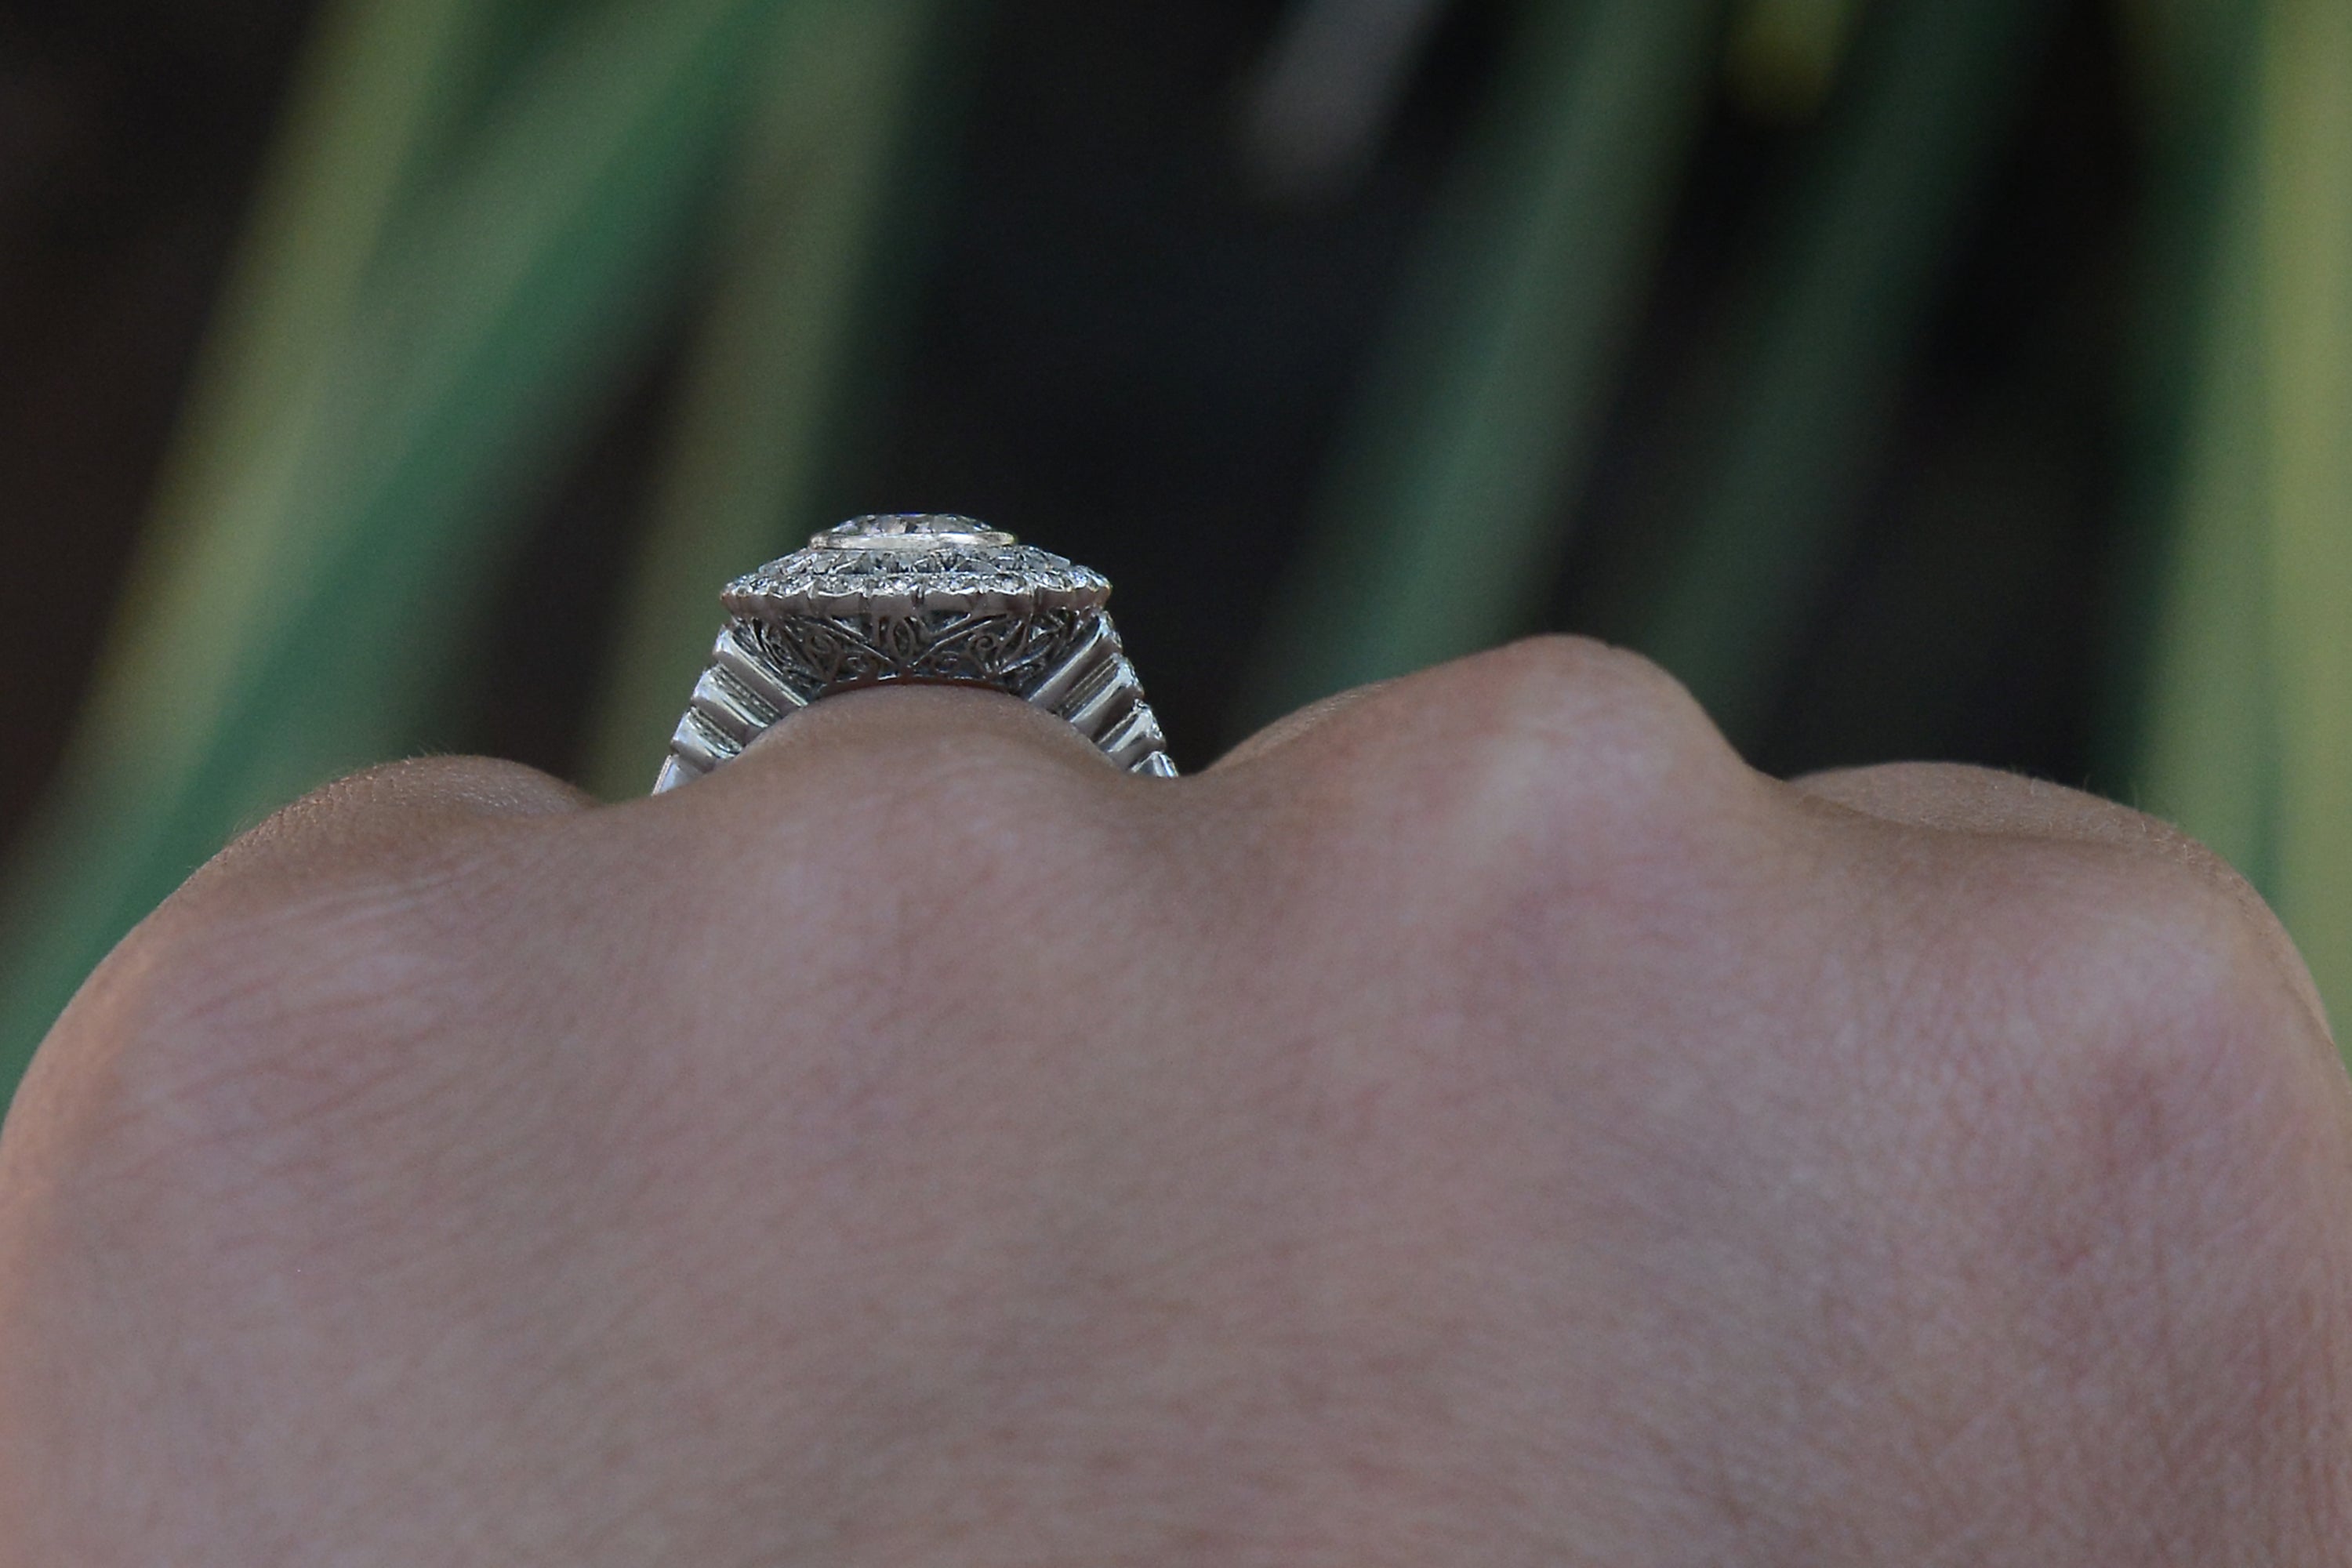 Art Deco Revival Honeycomb Filigree Diamond Engagement Ring